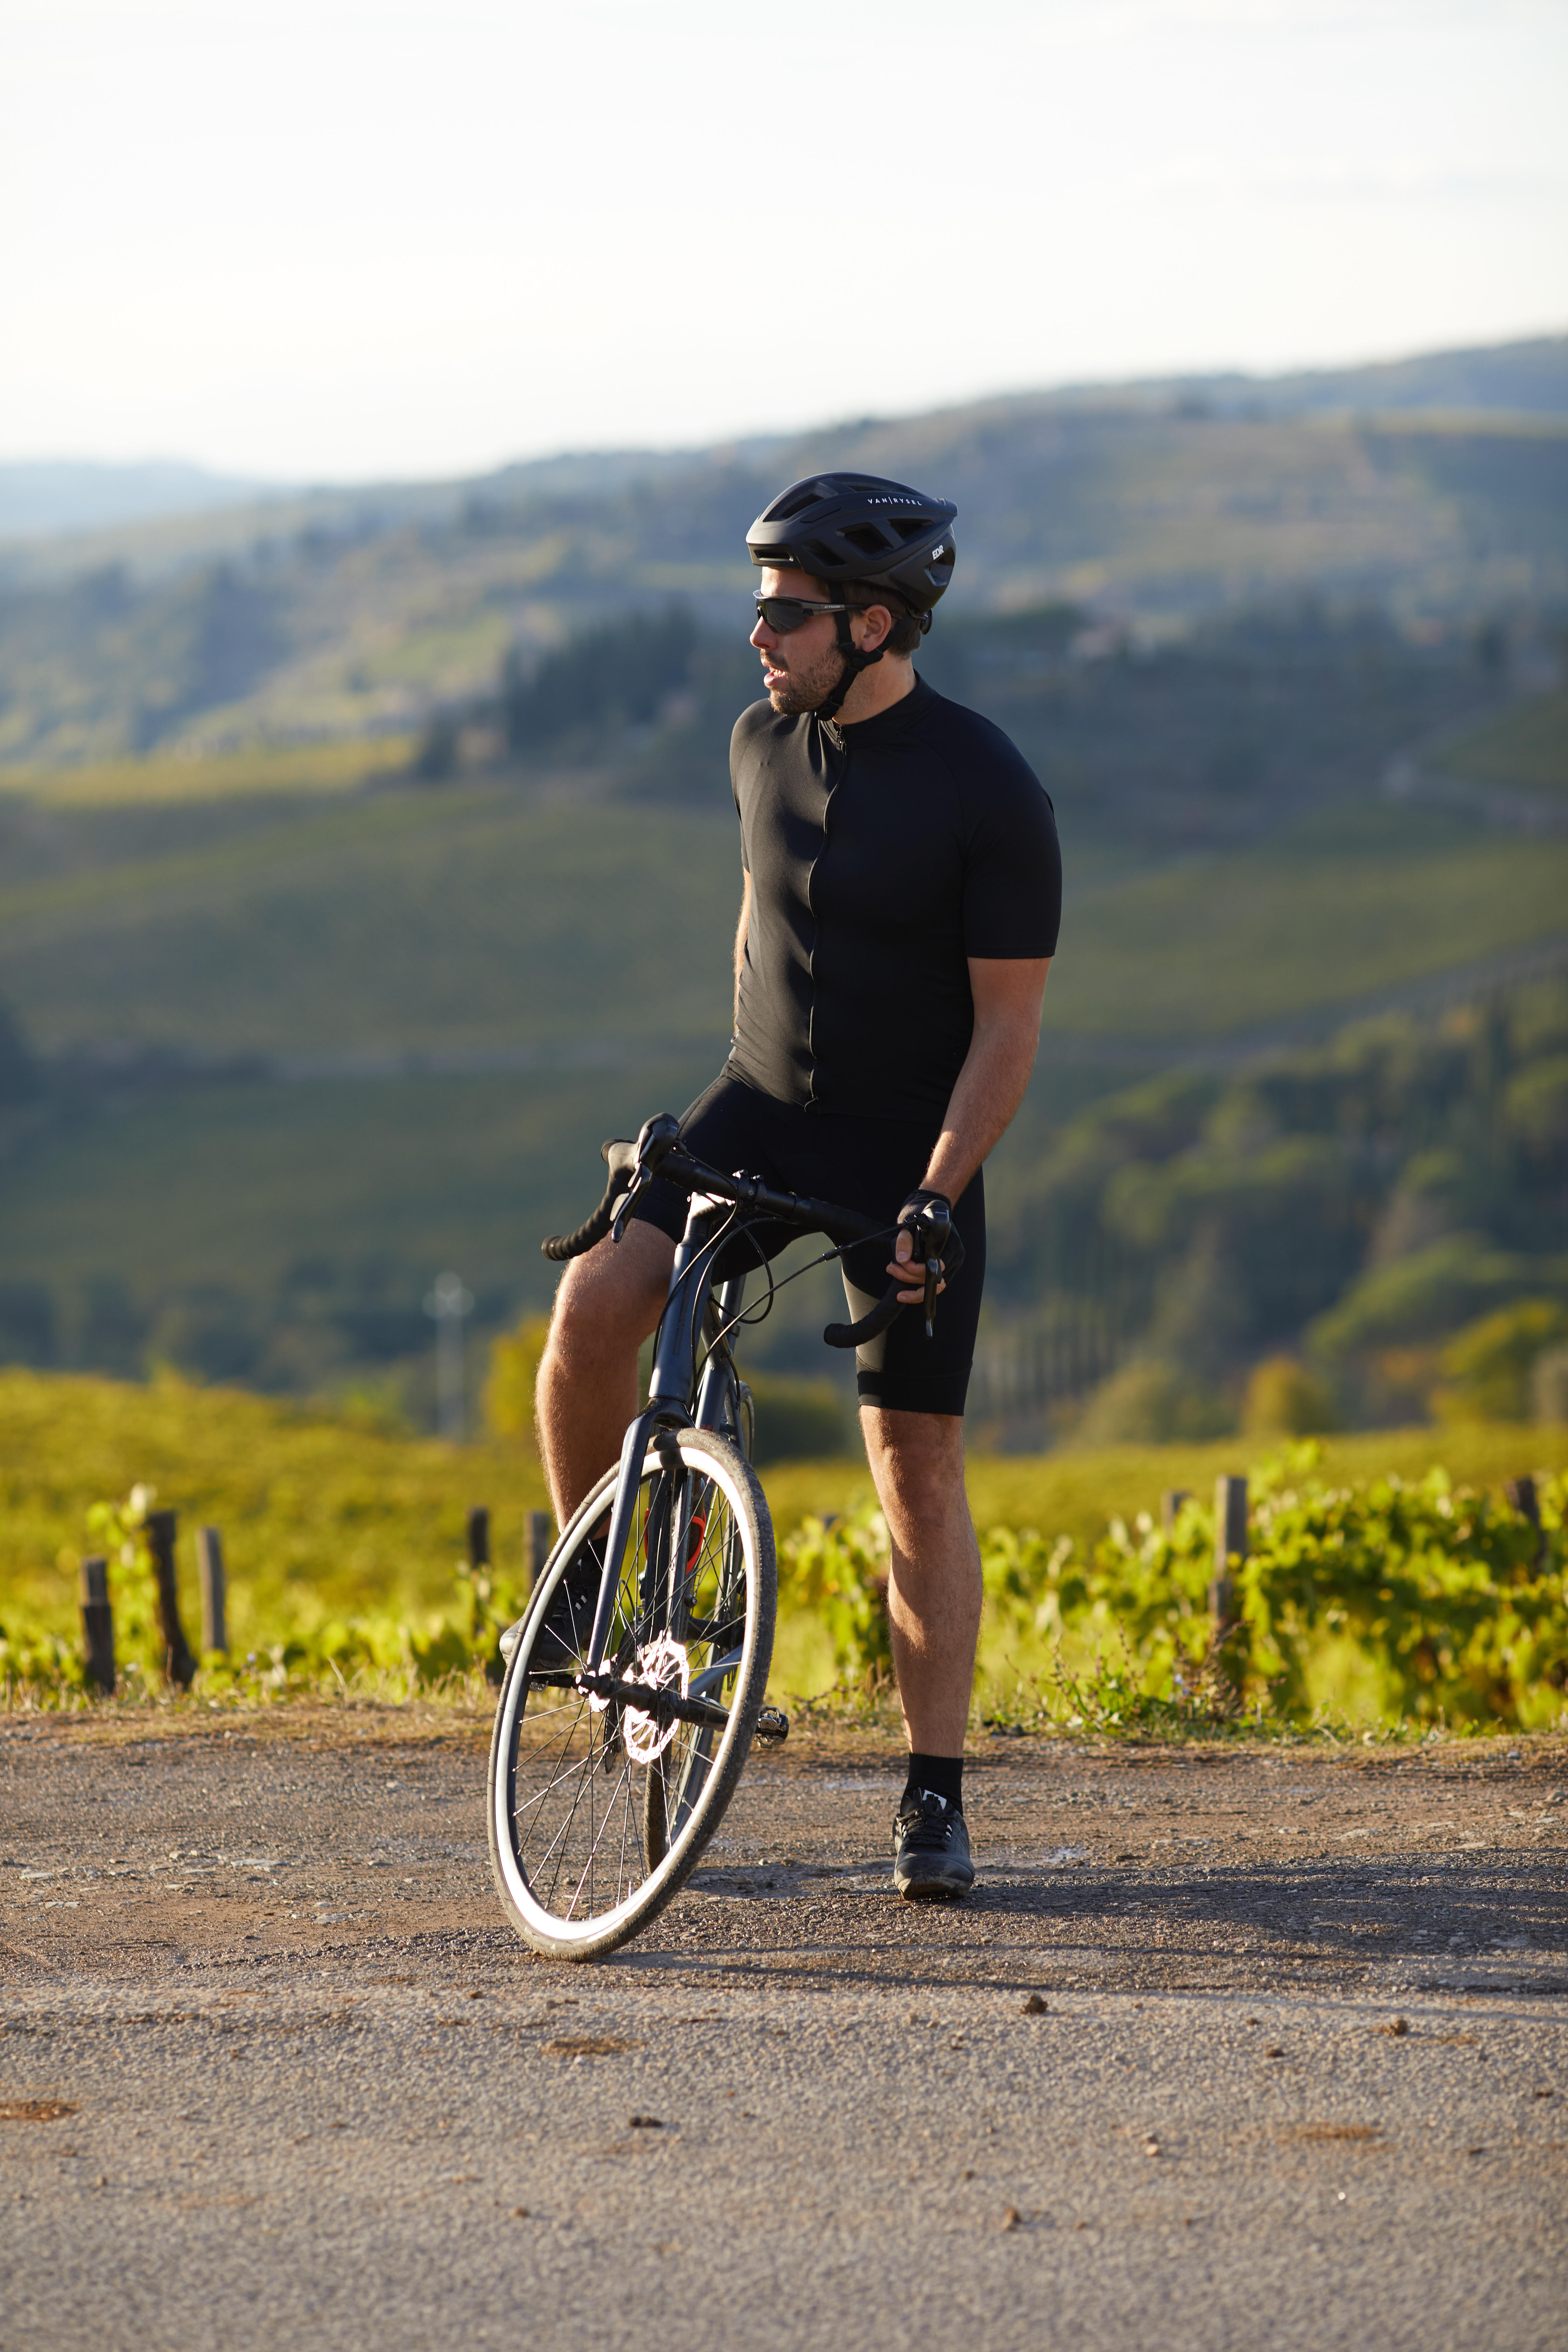 RC 100 cycling bib shorts - Men - Black, Black - Van rysel - Decathlon